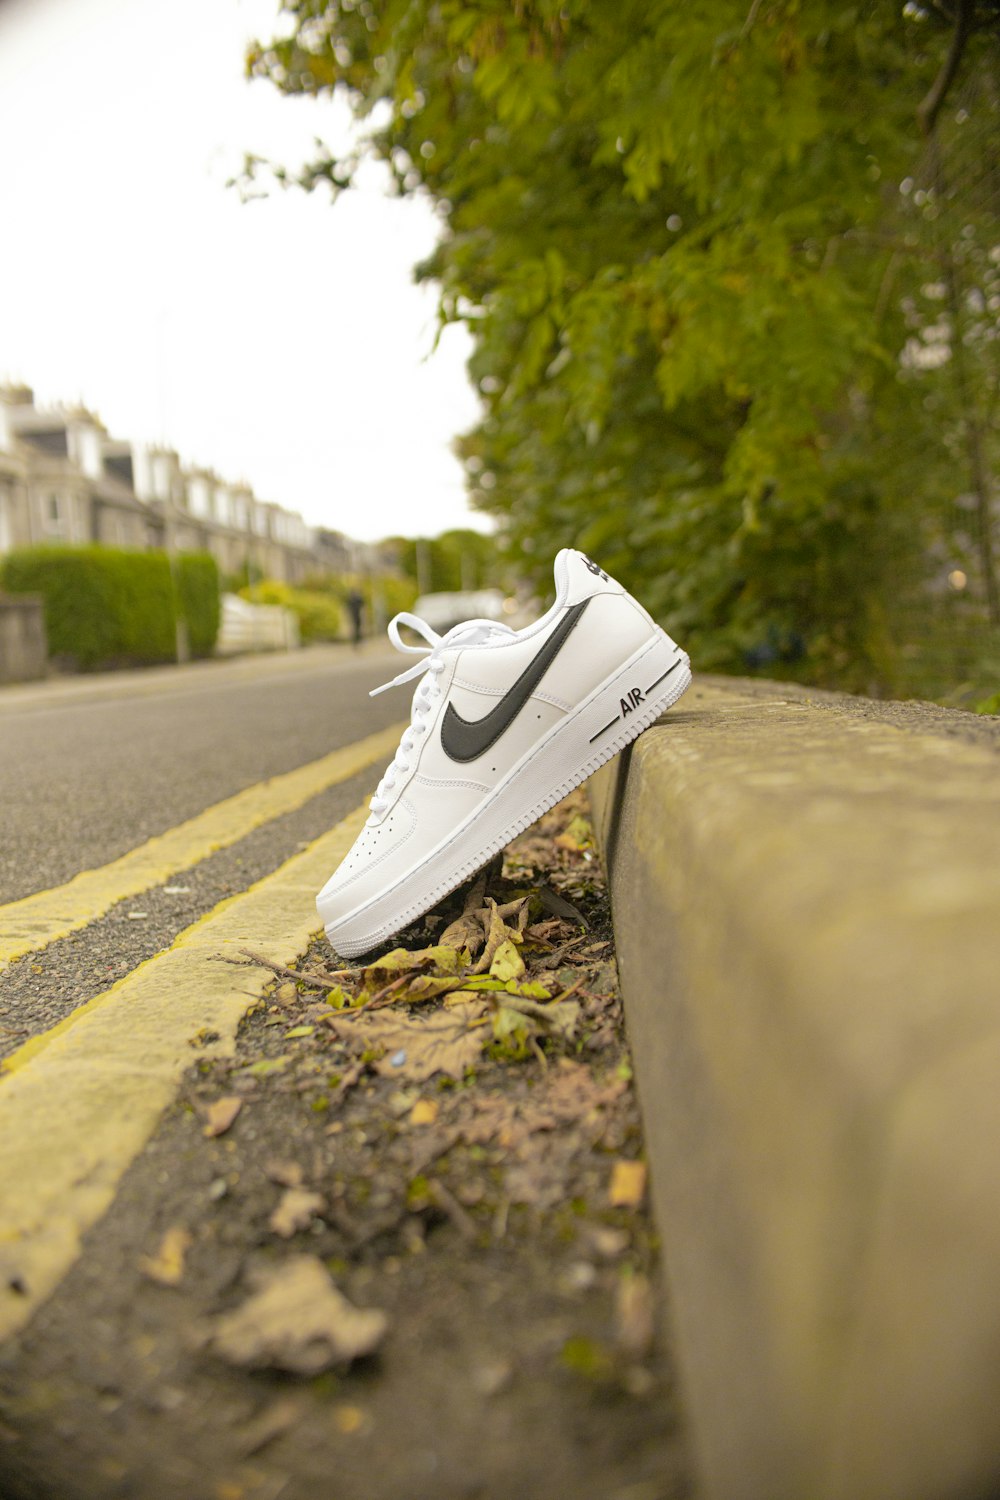 Zapatillas Nike de caña baja blancas sobre carretera de cemento gris